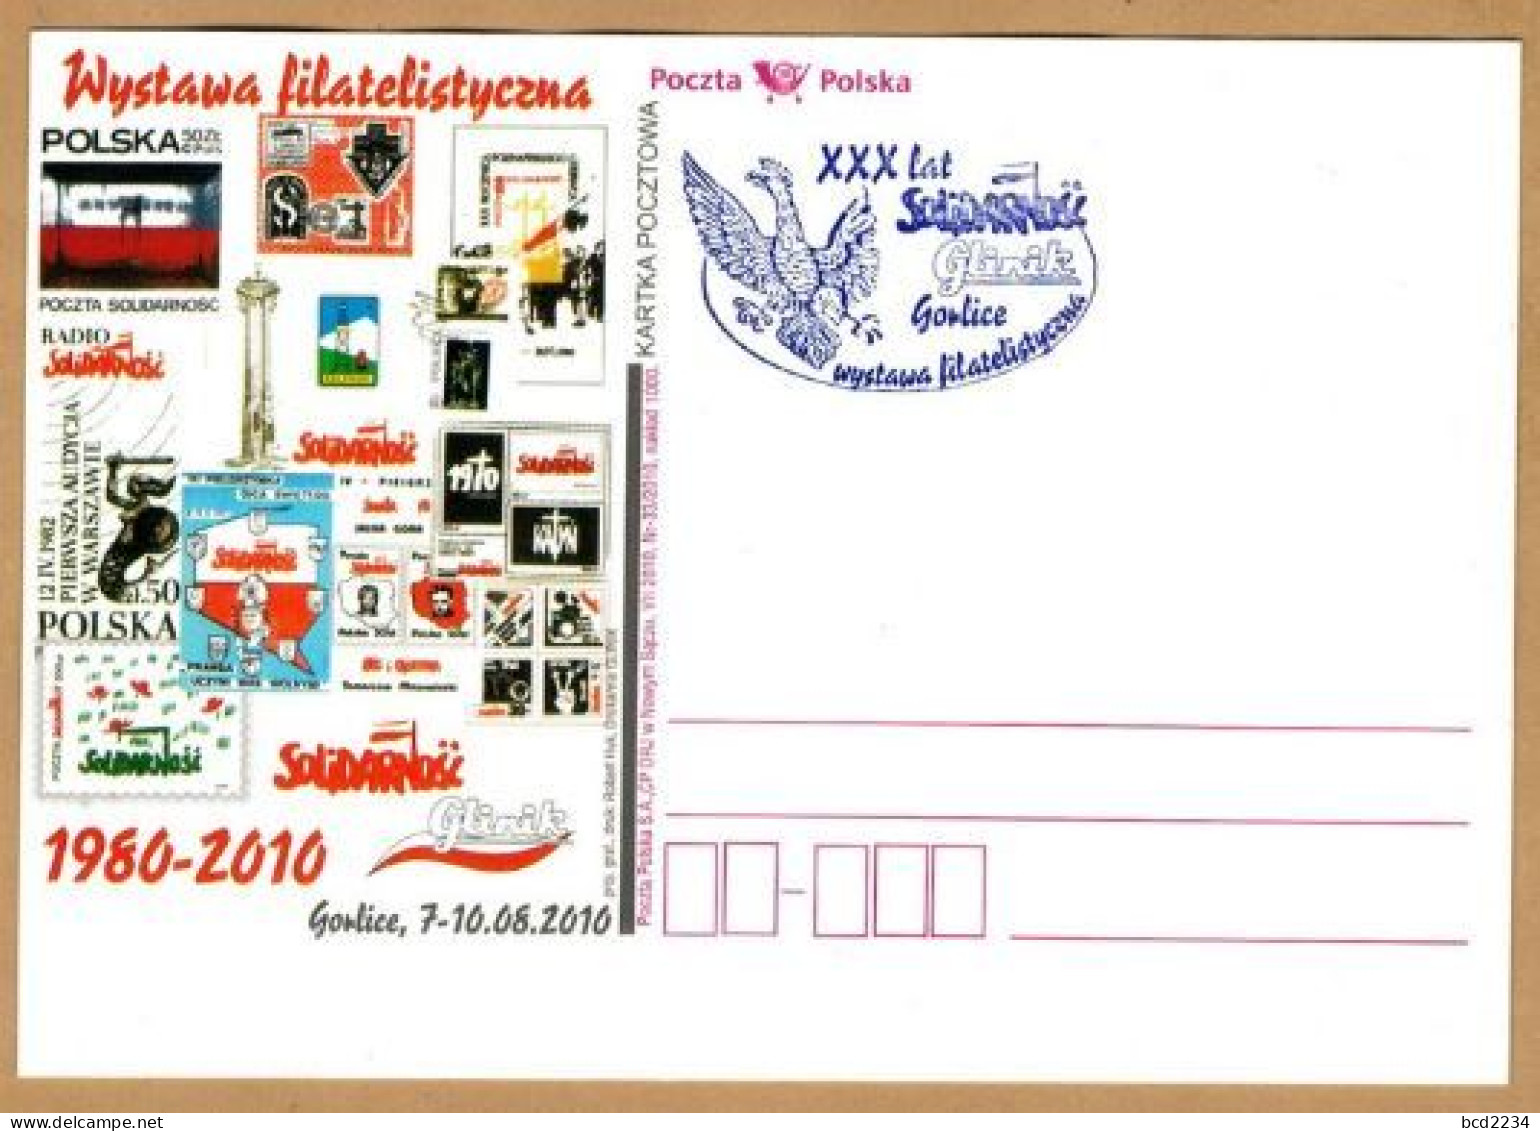 POLAND 2010 NOWY SACZ PO LIMITED EDITION PC: 30 YEARS SOLIDARITY 1980-2010 GORLICE PHILATELIC EXHIBITION & MAUVE CANCEL - Lettres & Documents